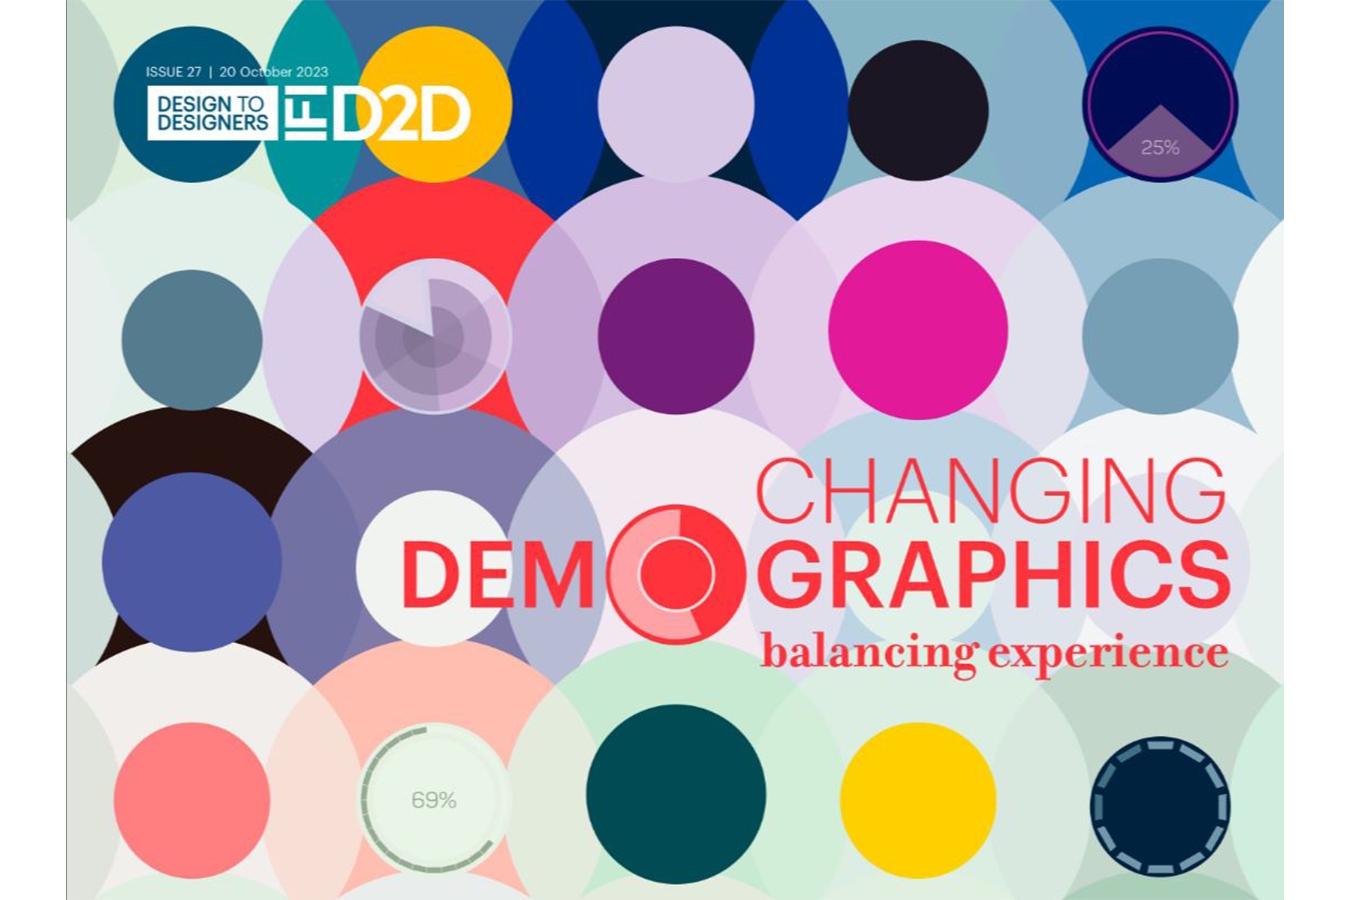 IAED at D2D (Design to Designers)